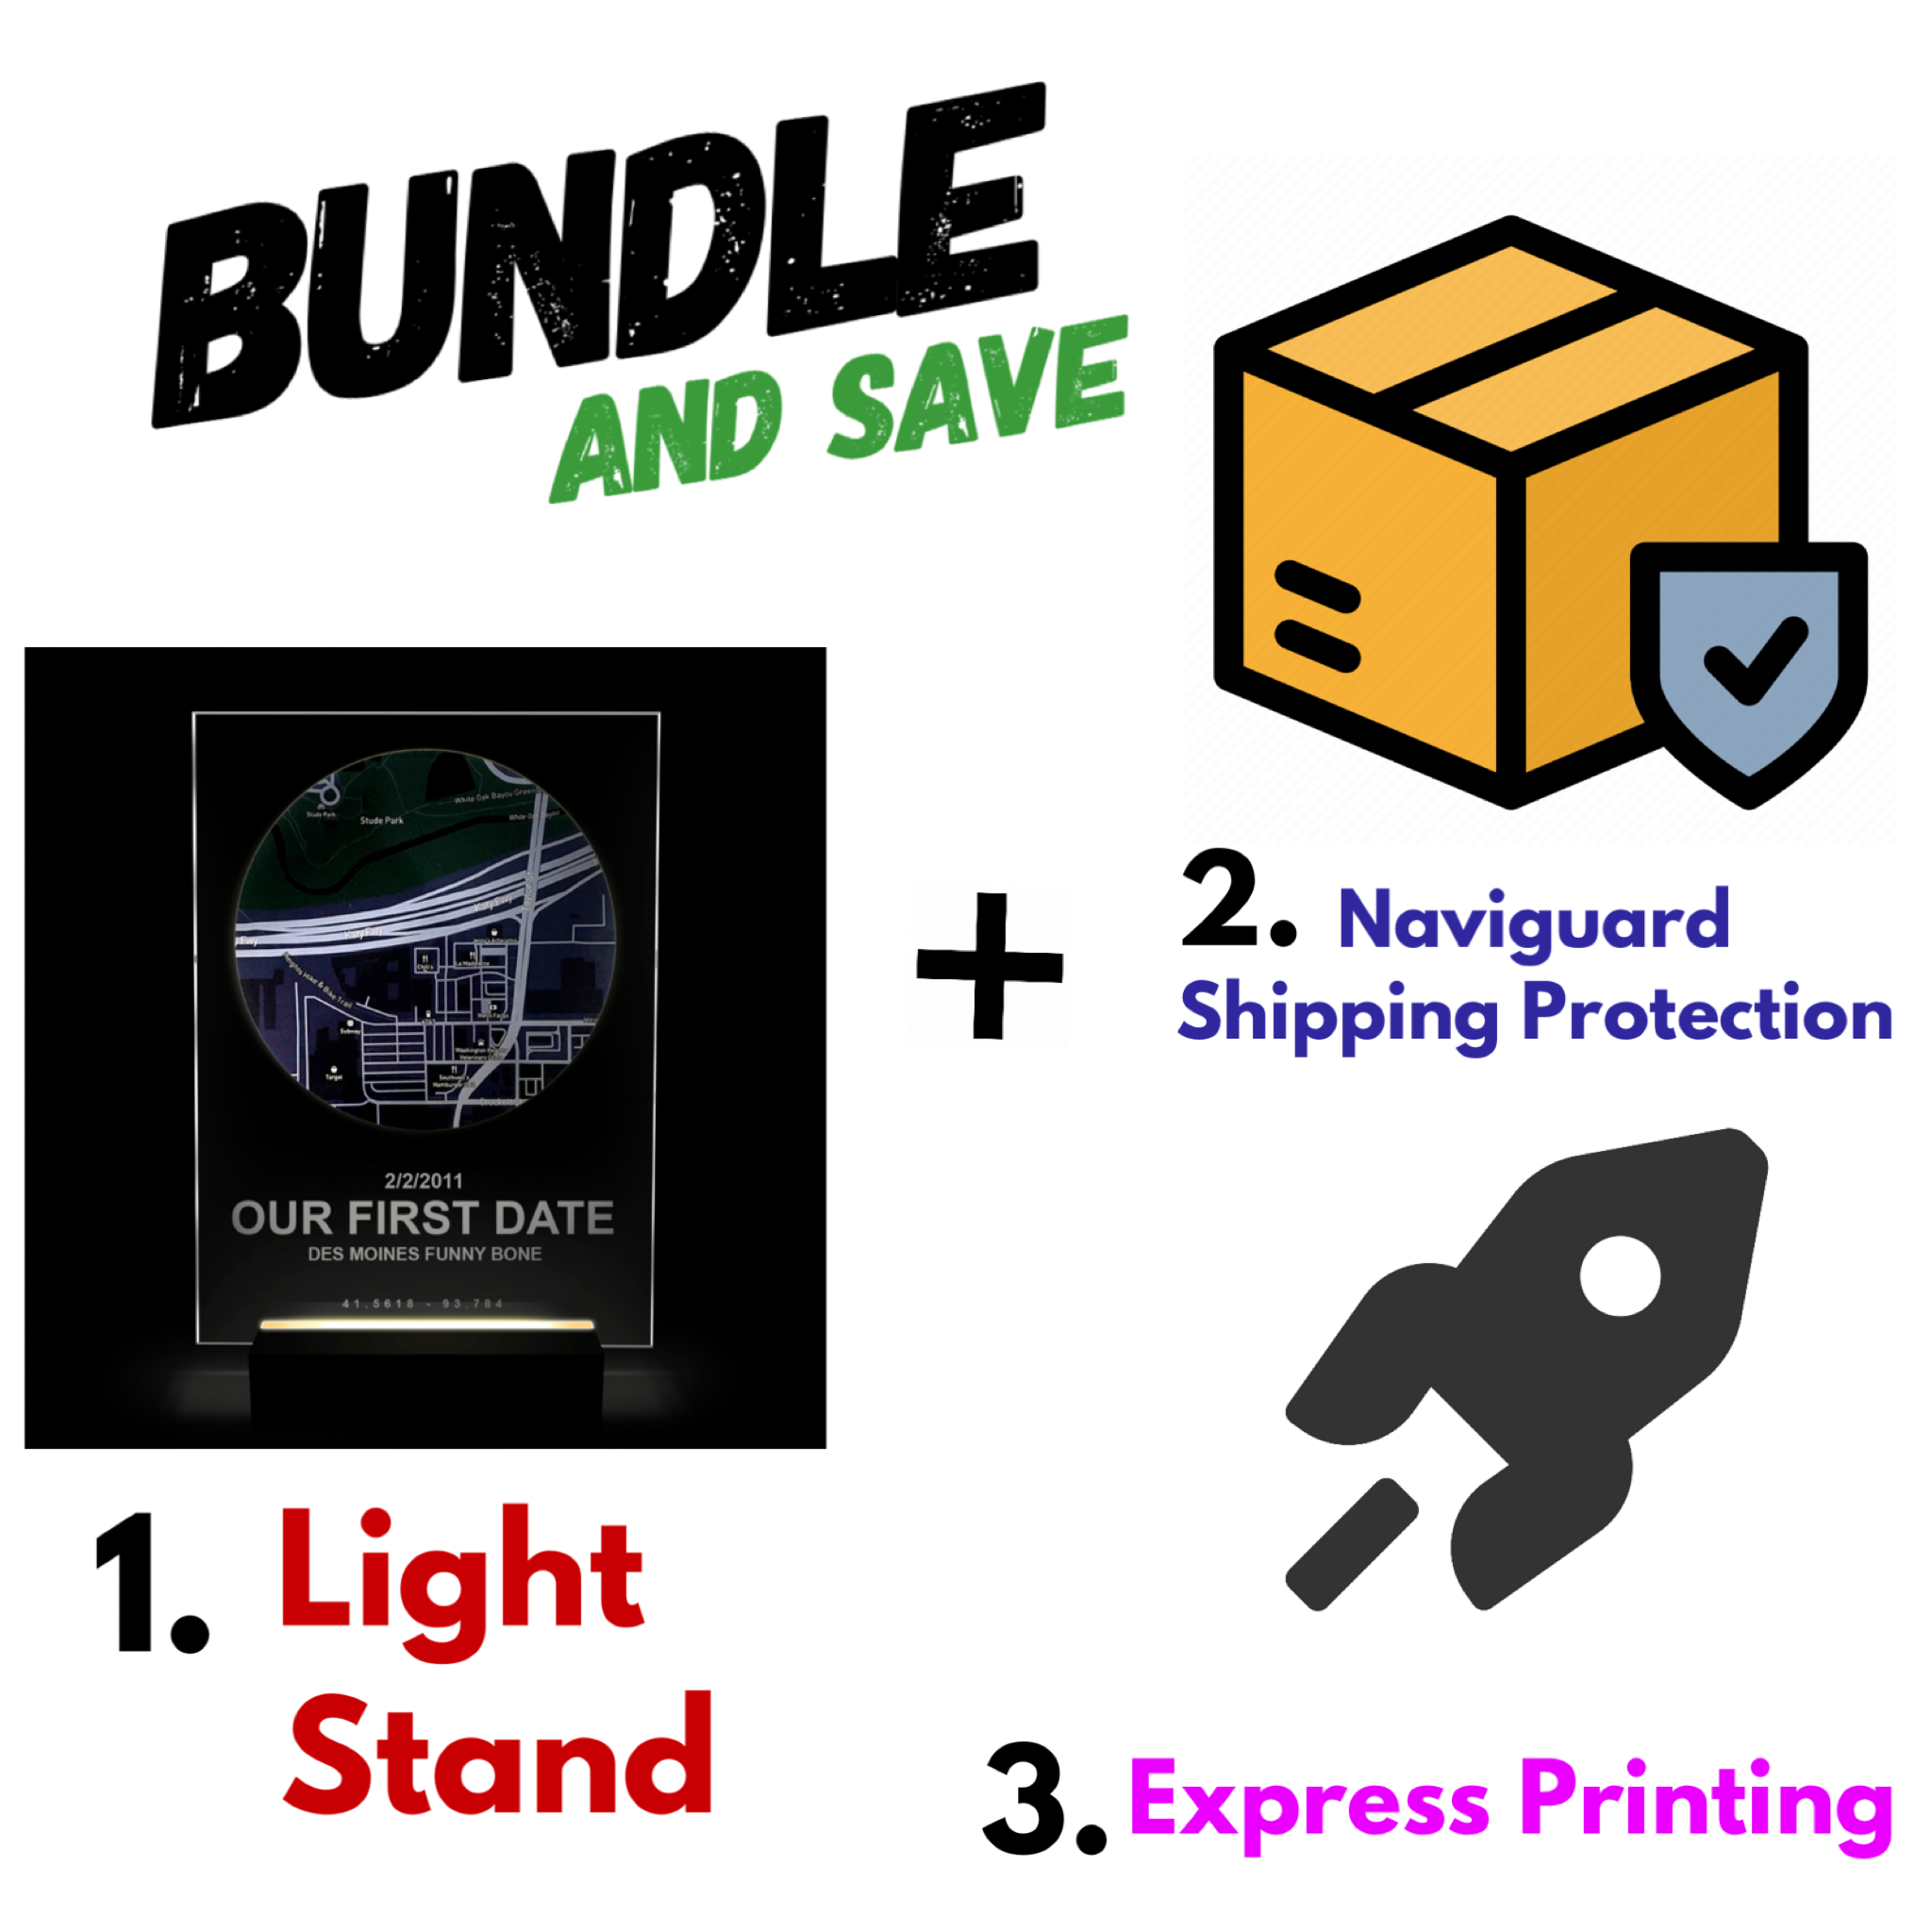 BUNDLE: Light Stand + Naviguard Shipping Protection + Express Printing